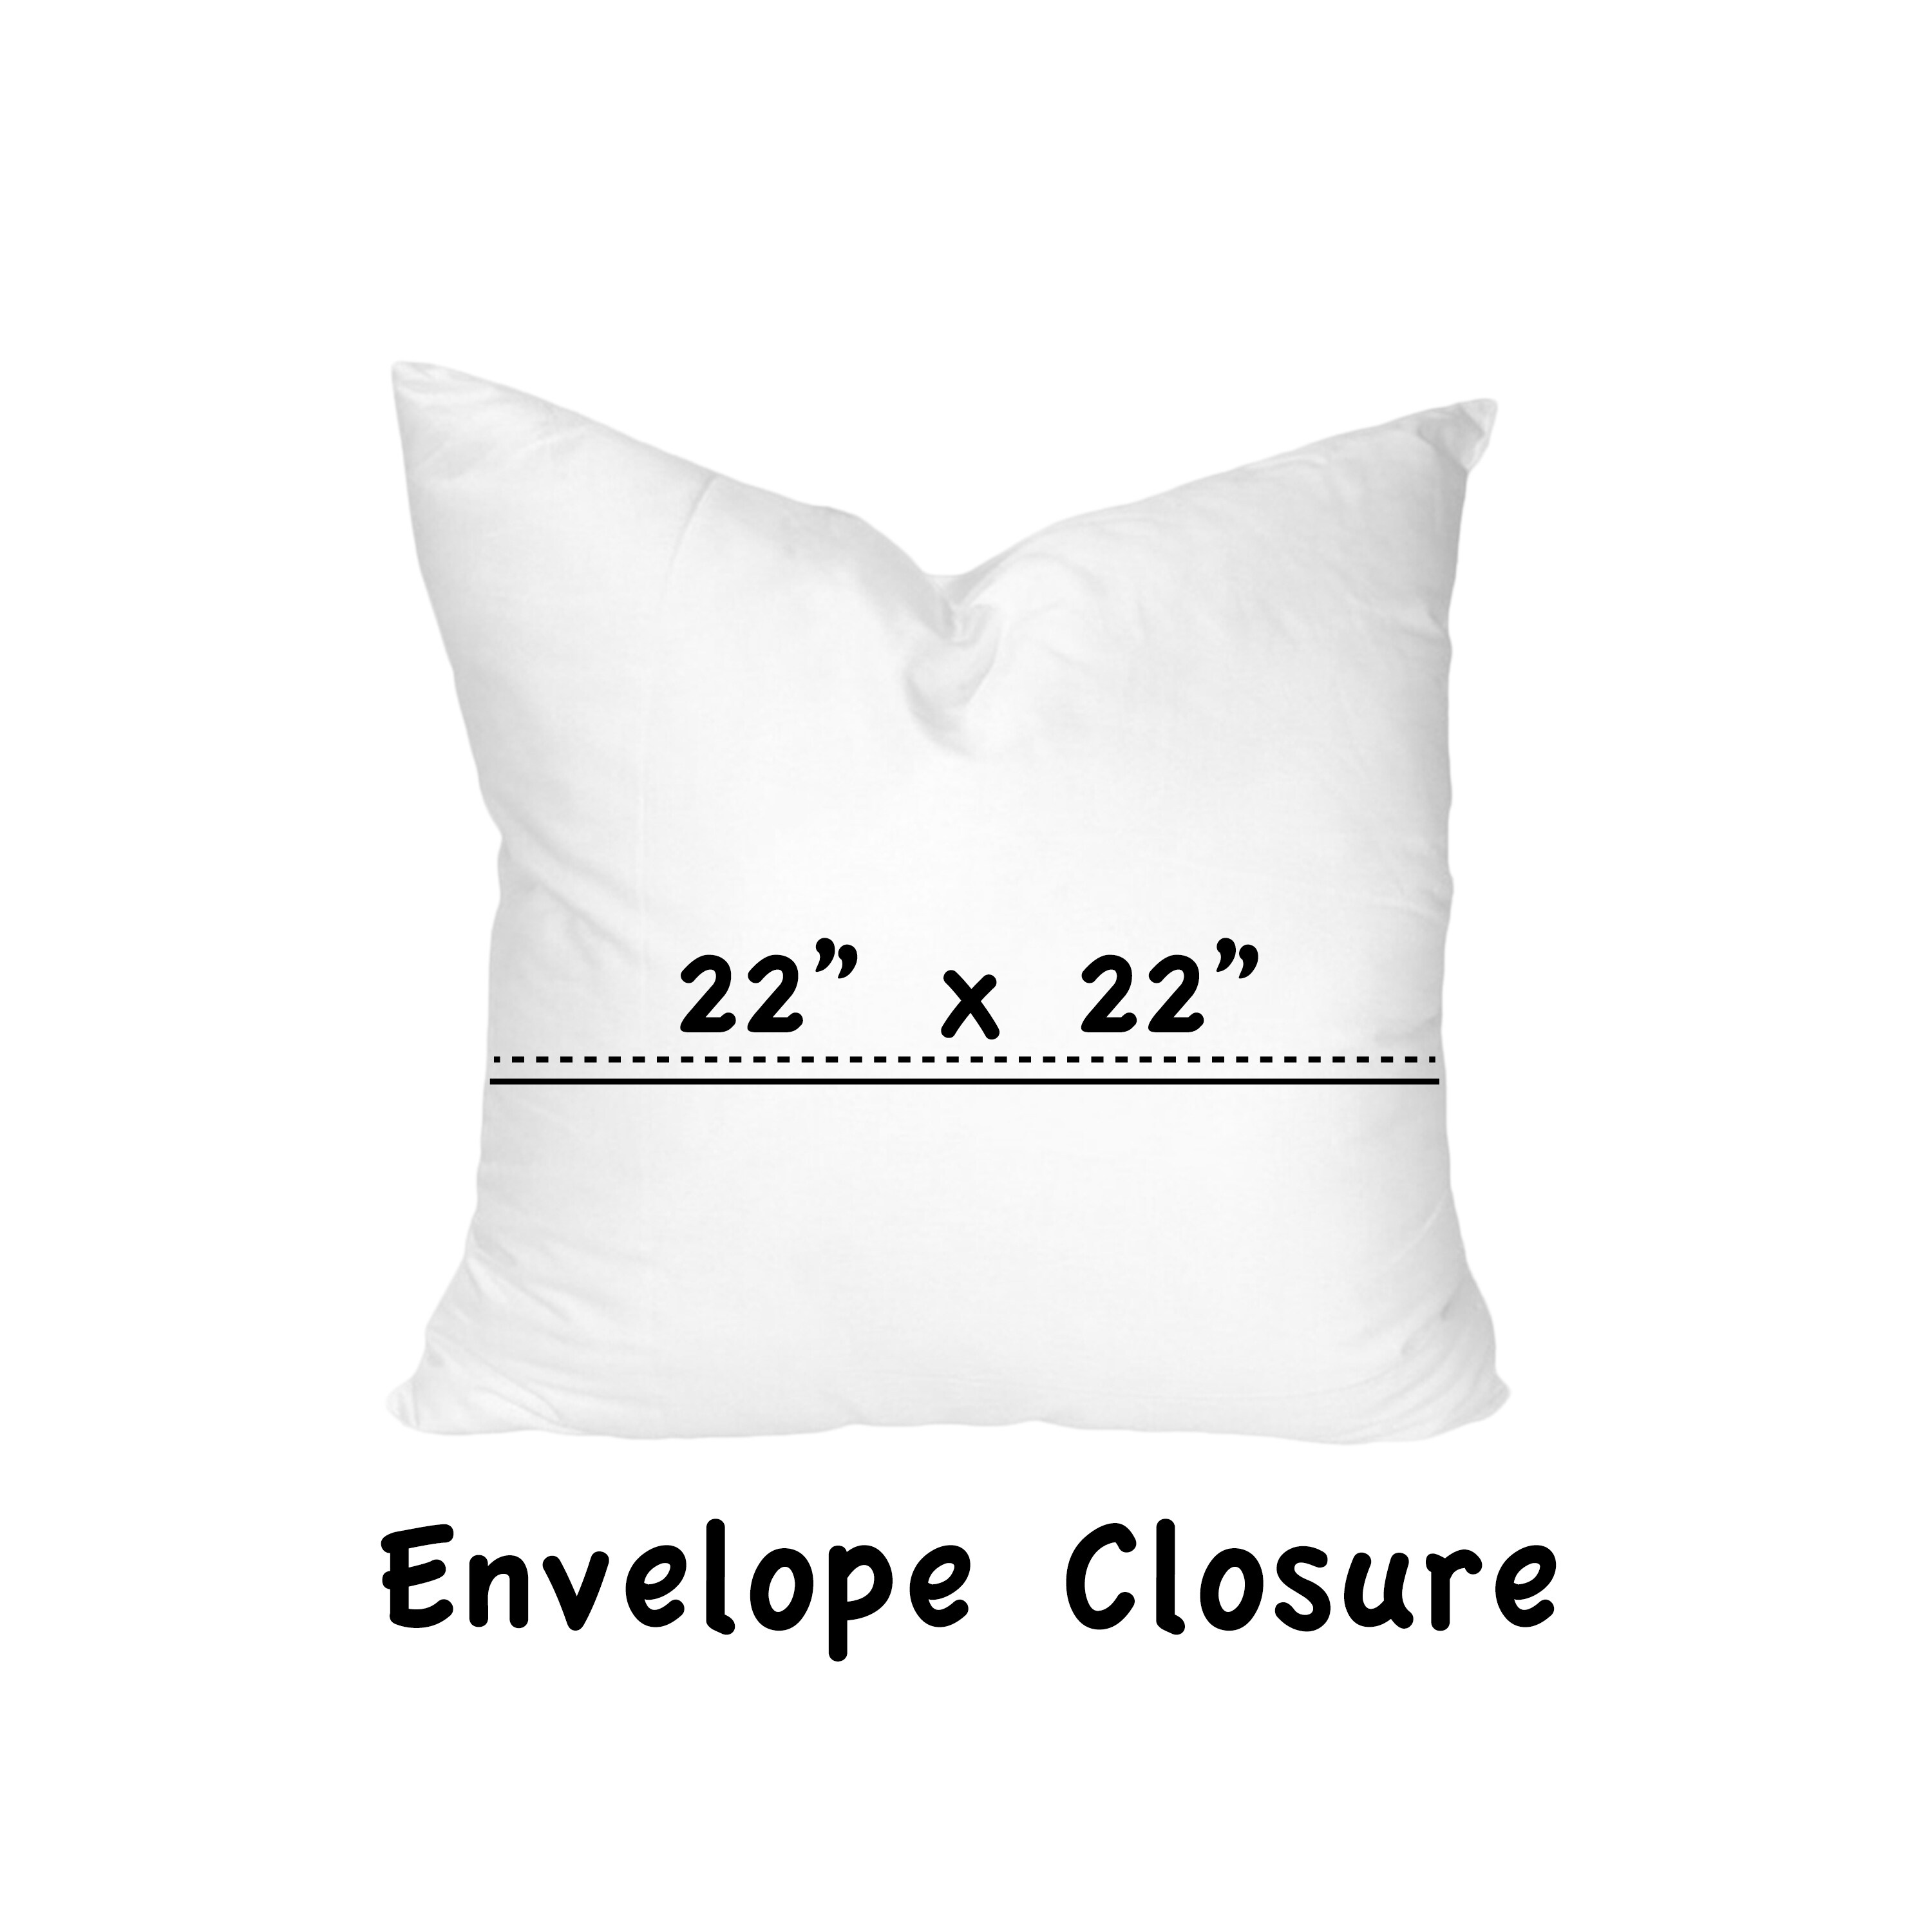 Pillow Inserts Pillow Forms 12x12 14x14 16x16 18x18 20x20 Polyfil